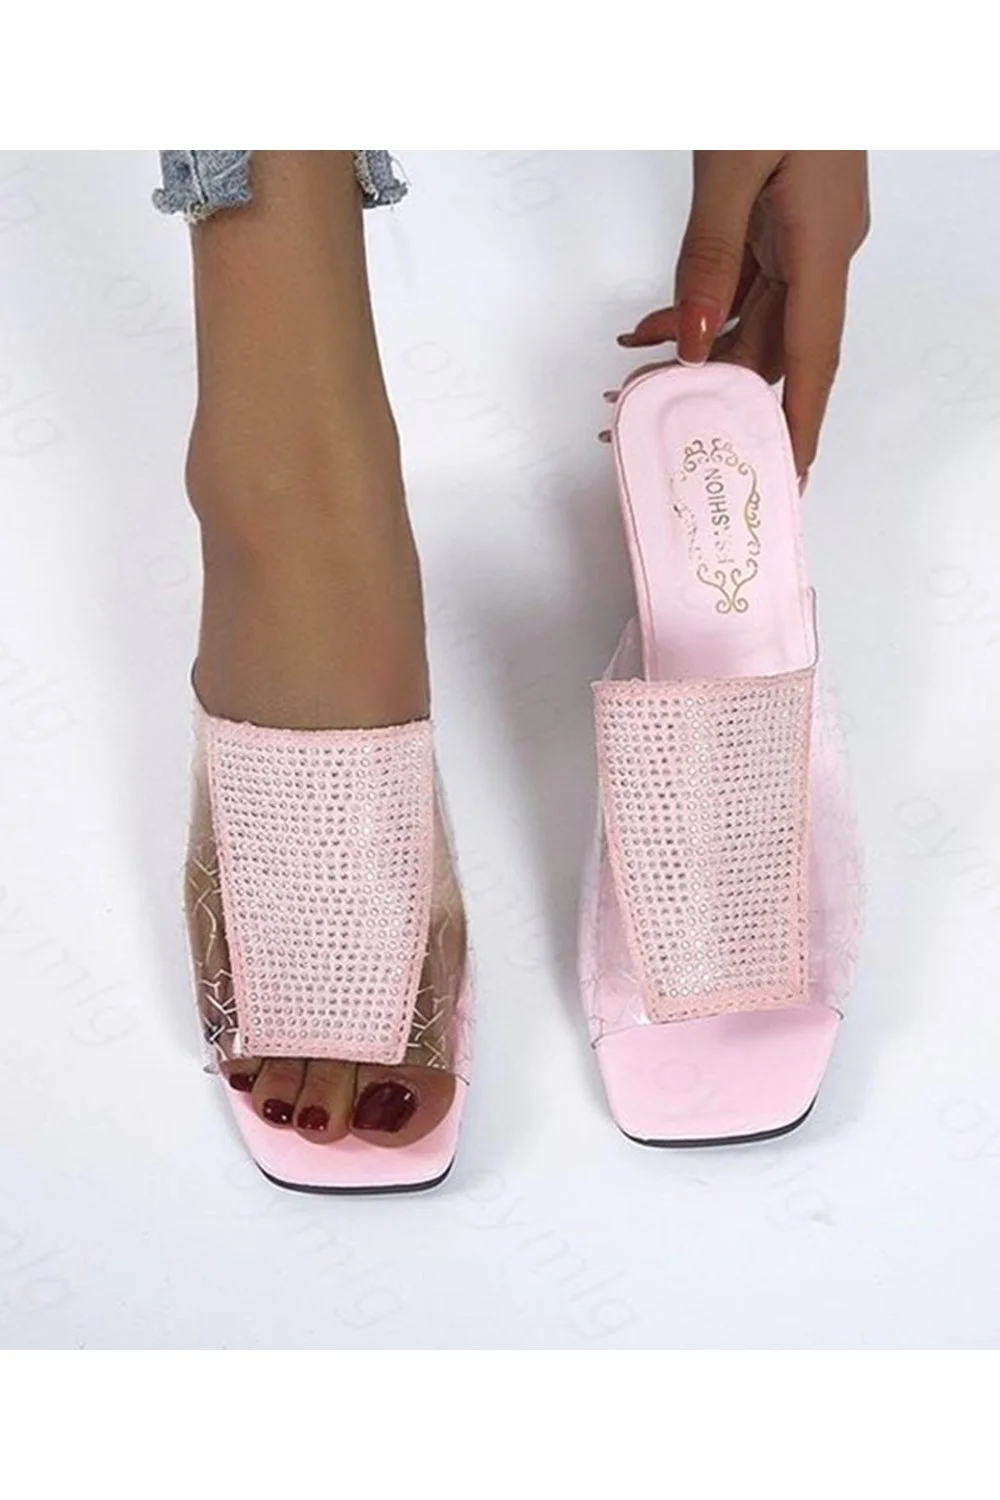  Fashion Summer Crystal Sandals Rhinestone Heels Open Toe Shoes Woman Colorful Ladies Beach Flip Flops Slides 928-0